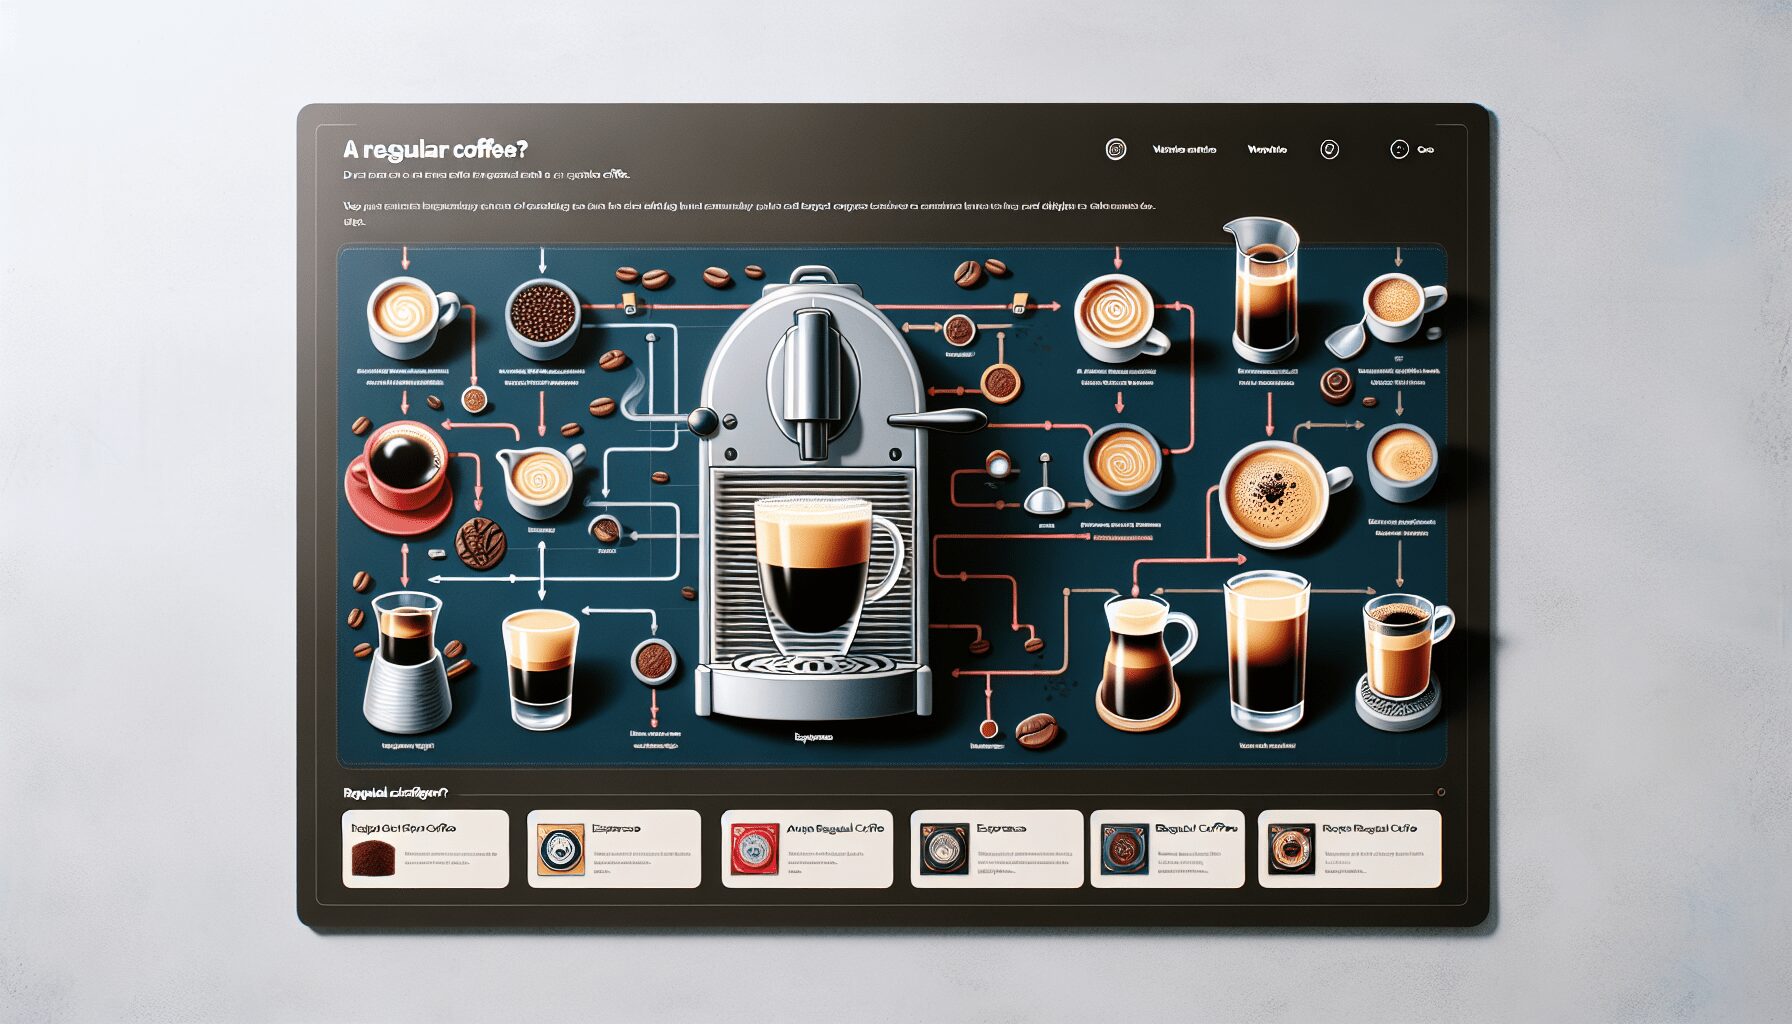 Can Nespresso Make Regular Coffee?